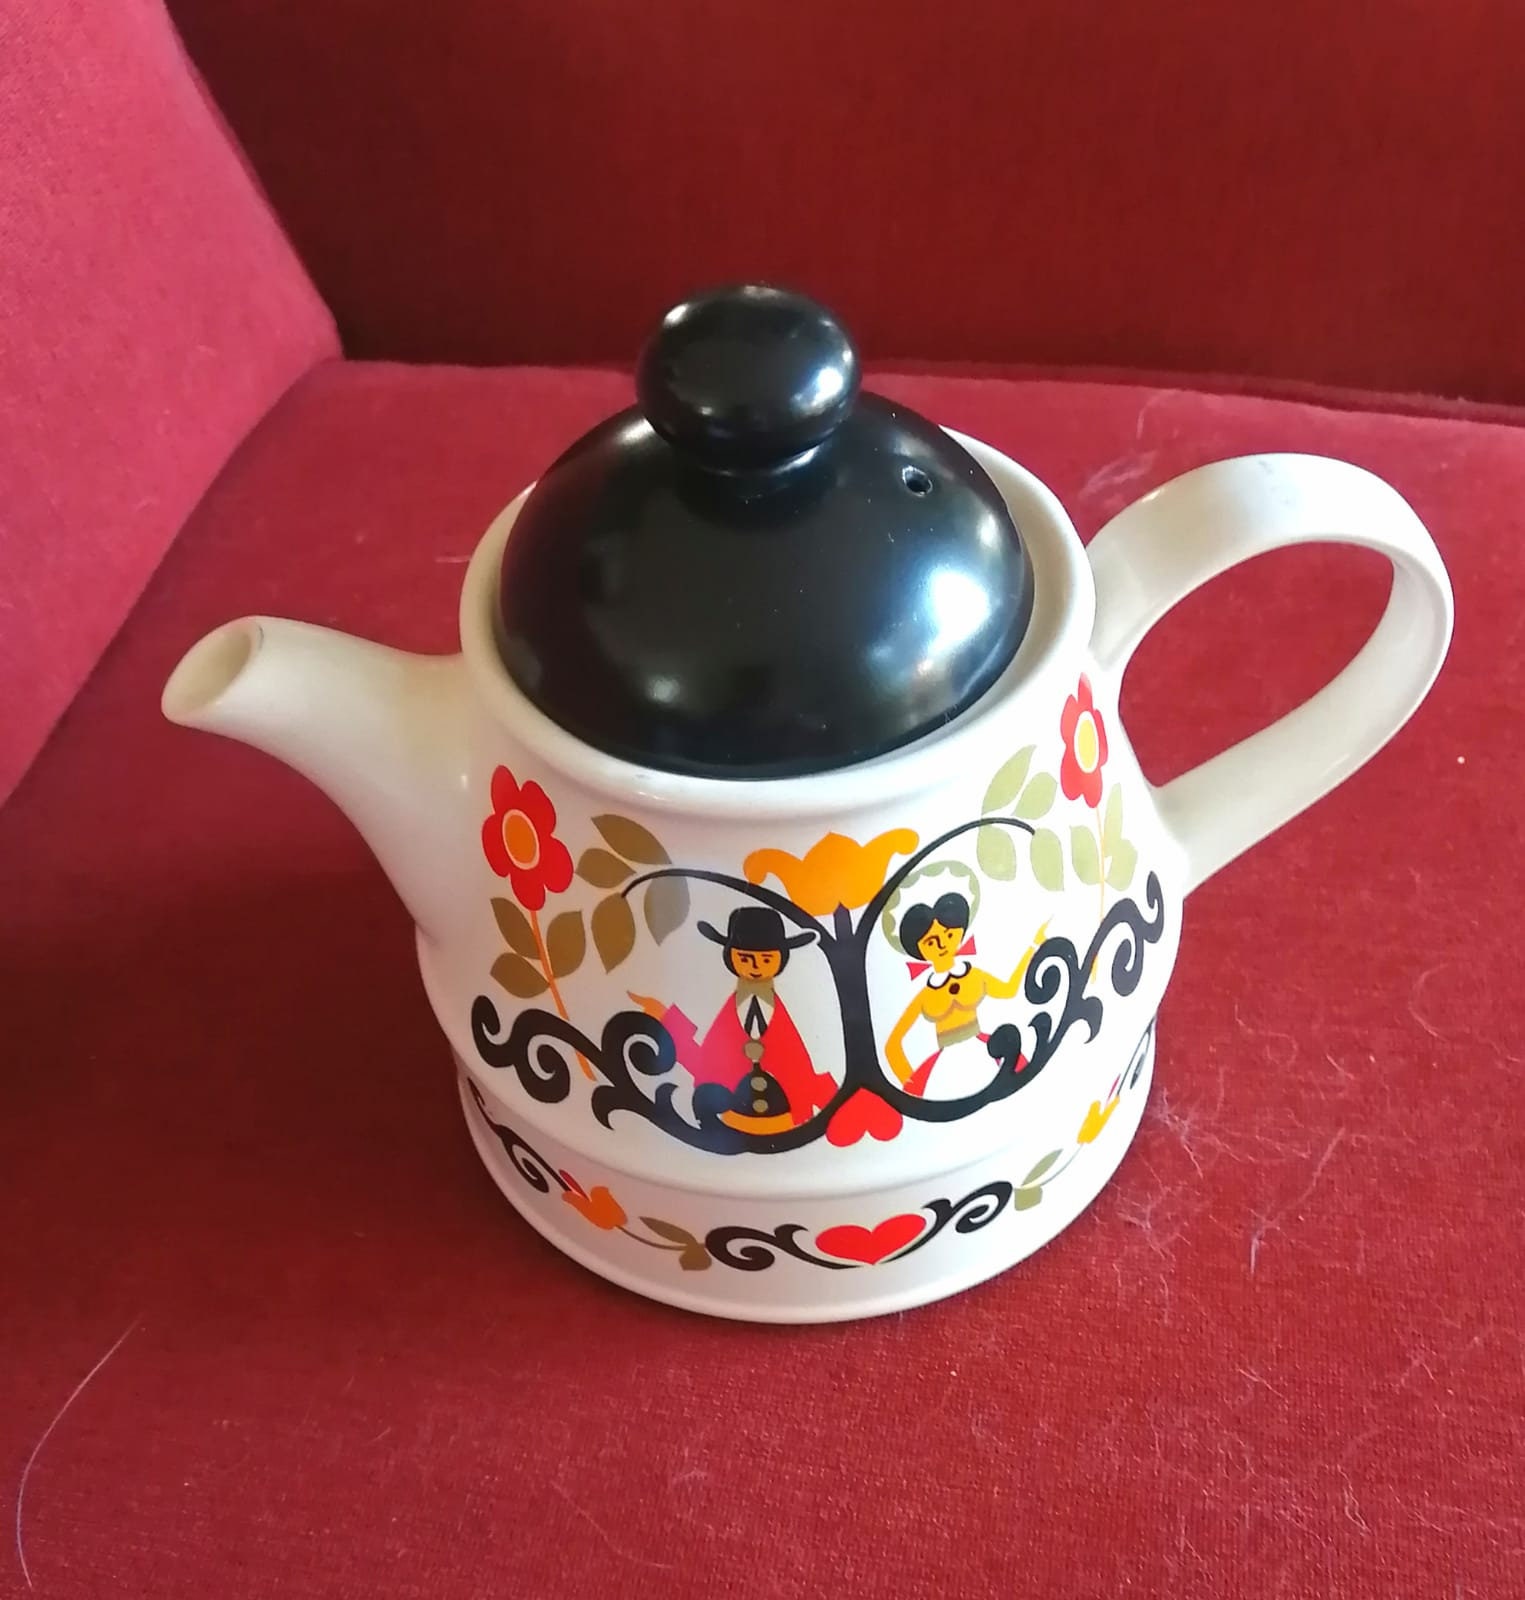 Franciscan Metropolitan Teapot Grey Mid Century Modern Teapot